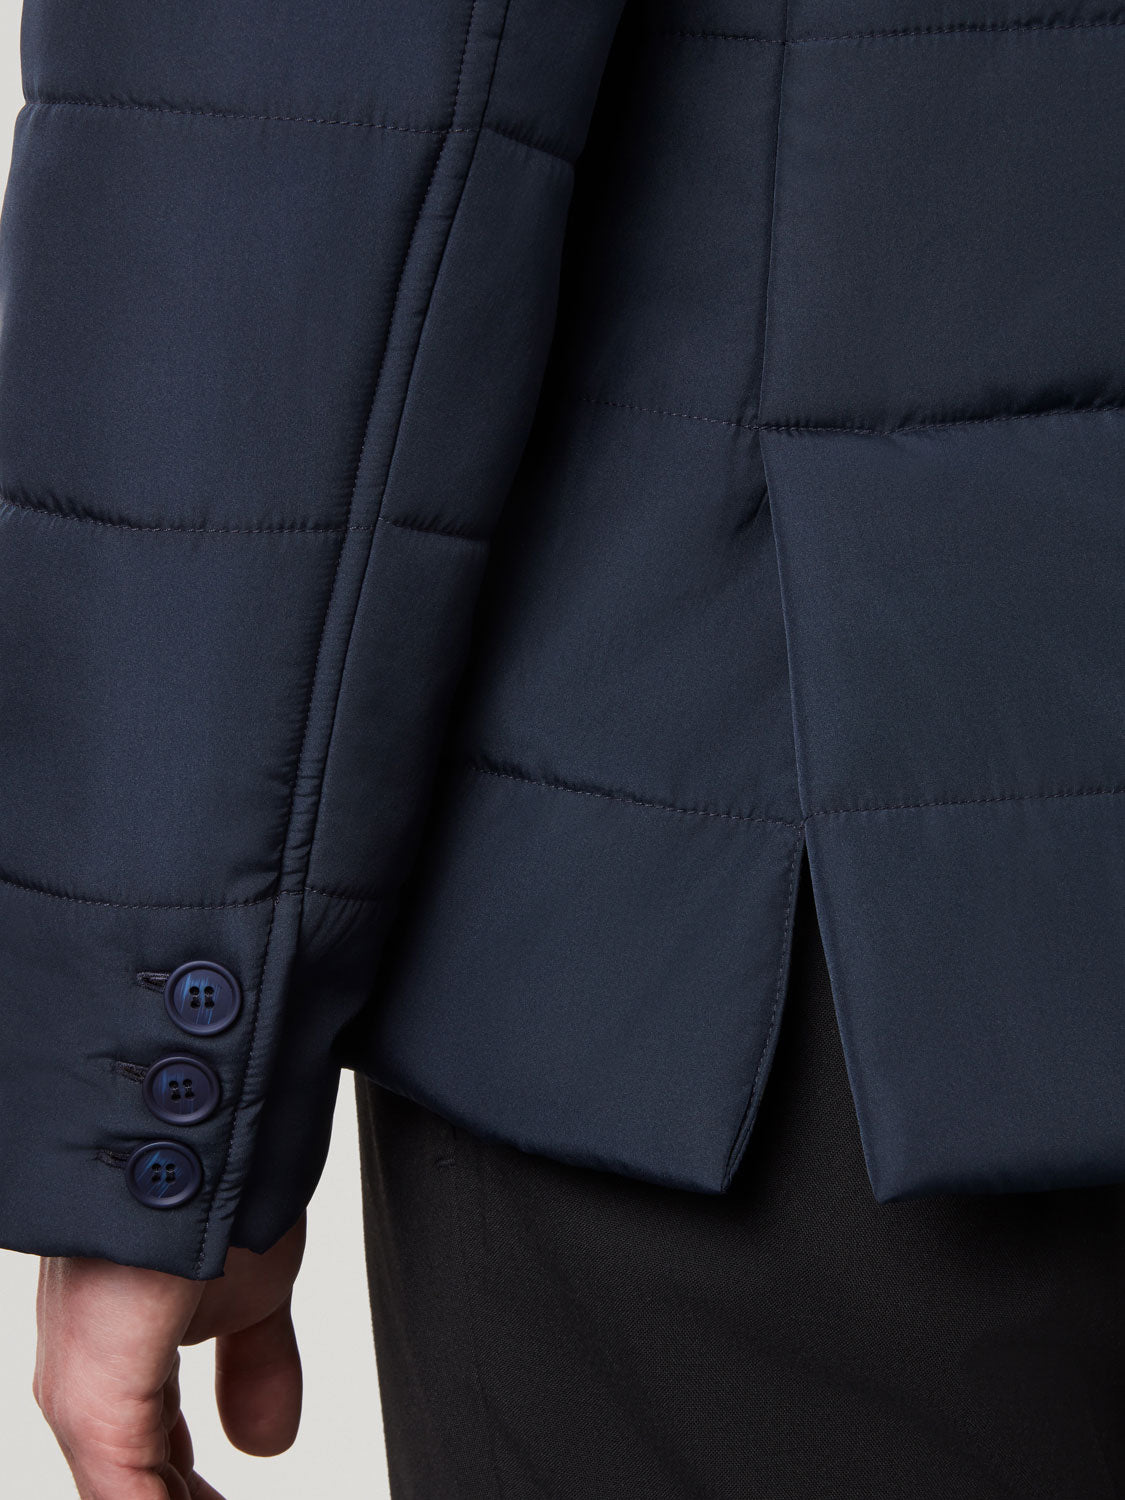 Puffer Suit Jacket - Navy